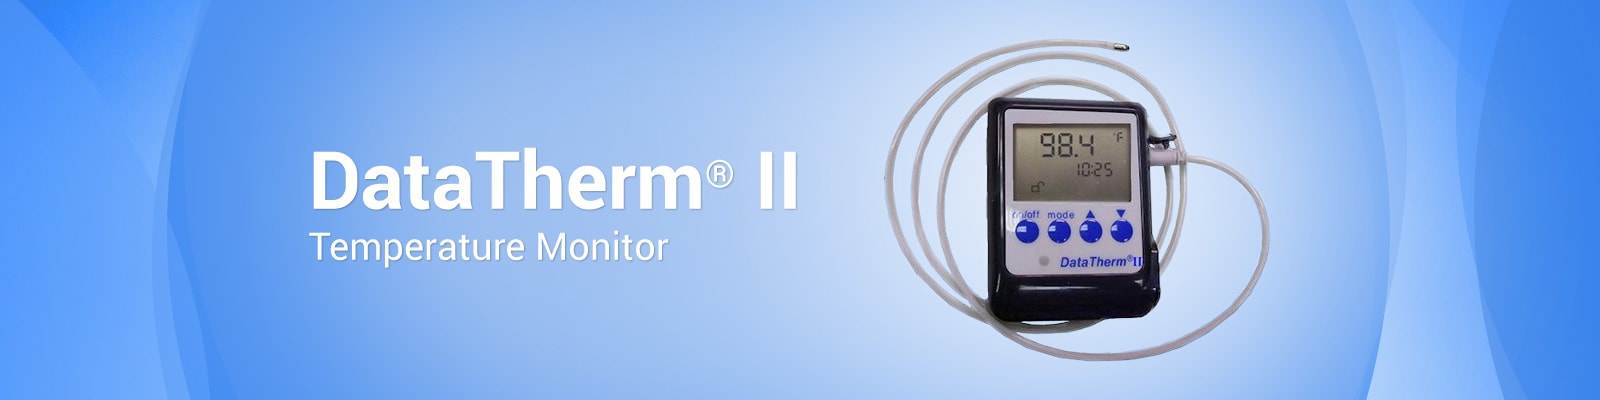 Monitor de temperatura DataTherm® II de Henry Schein Medical